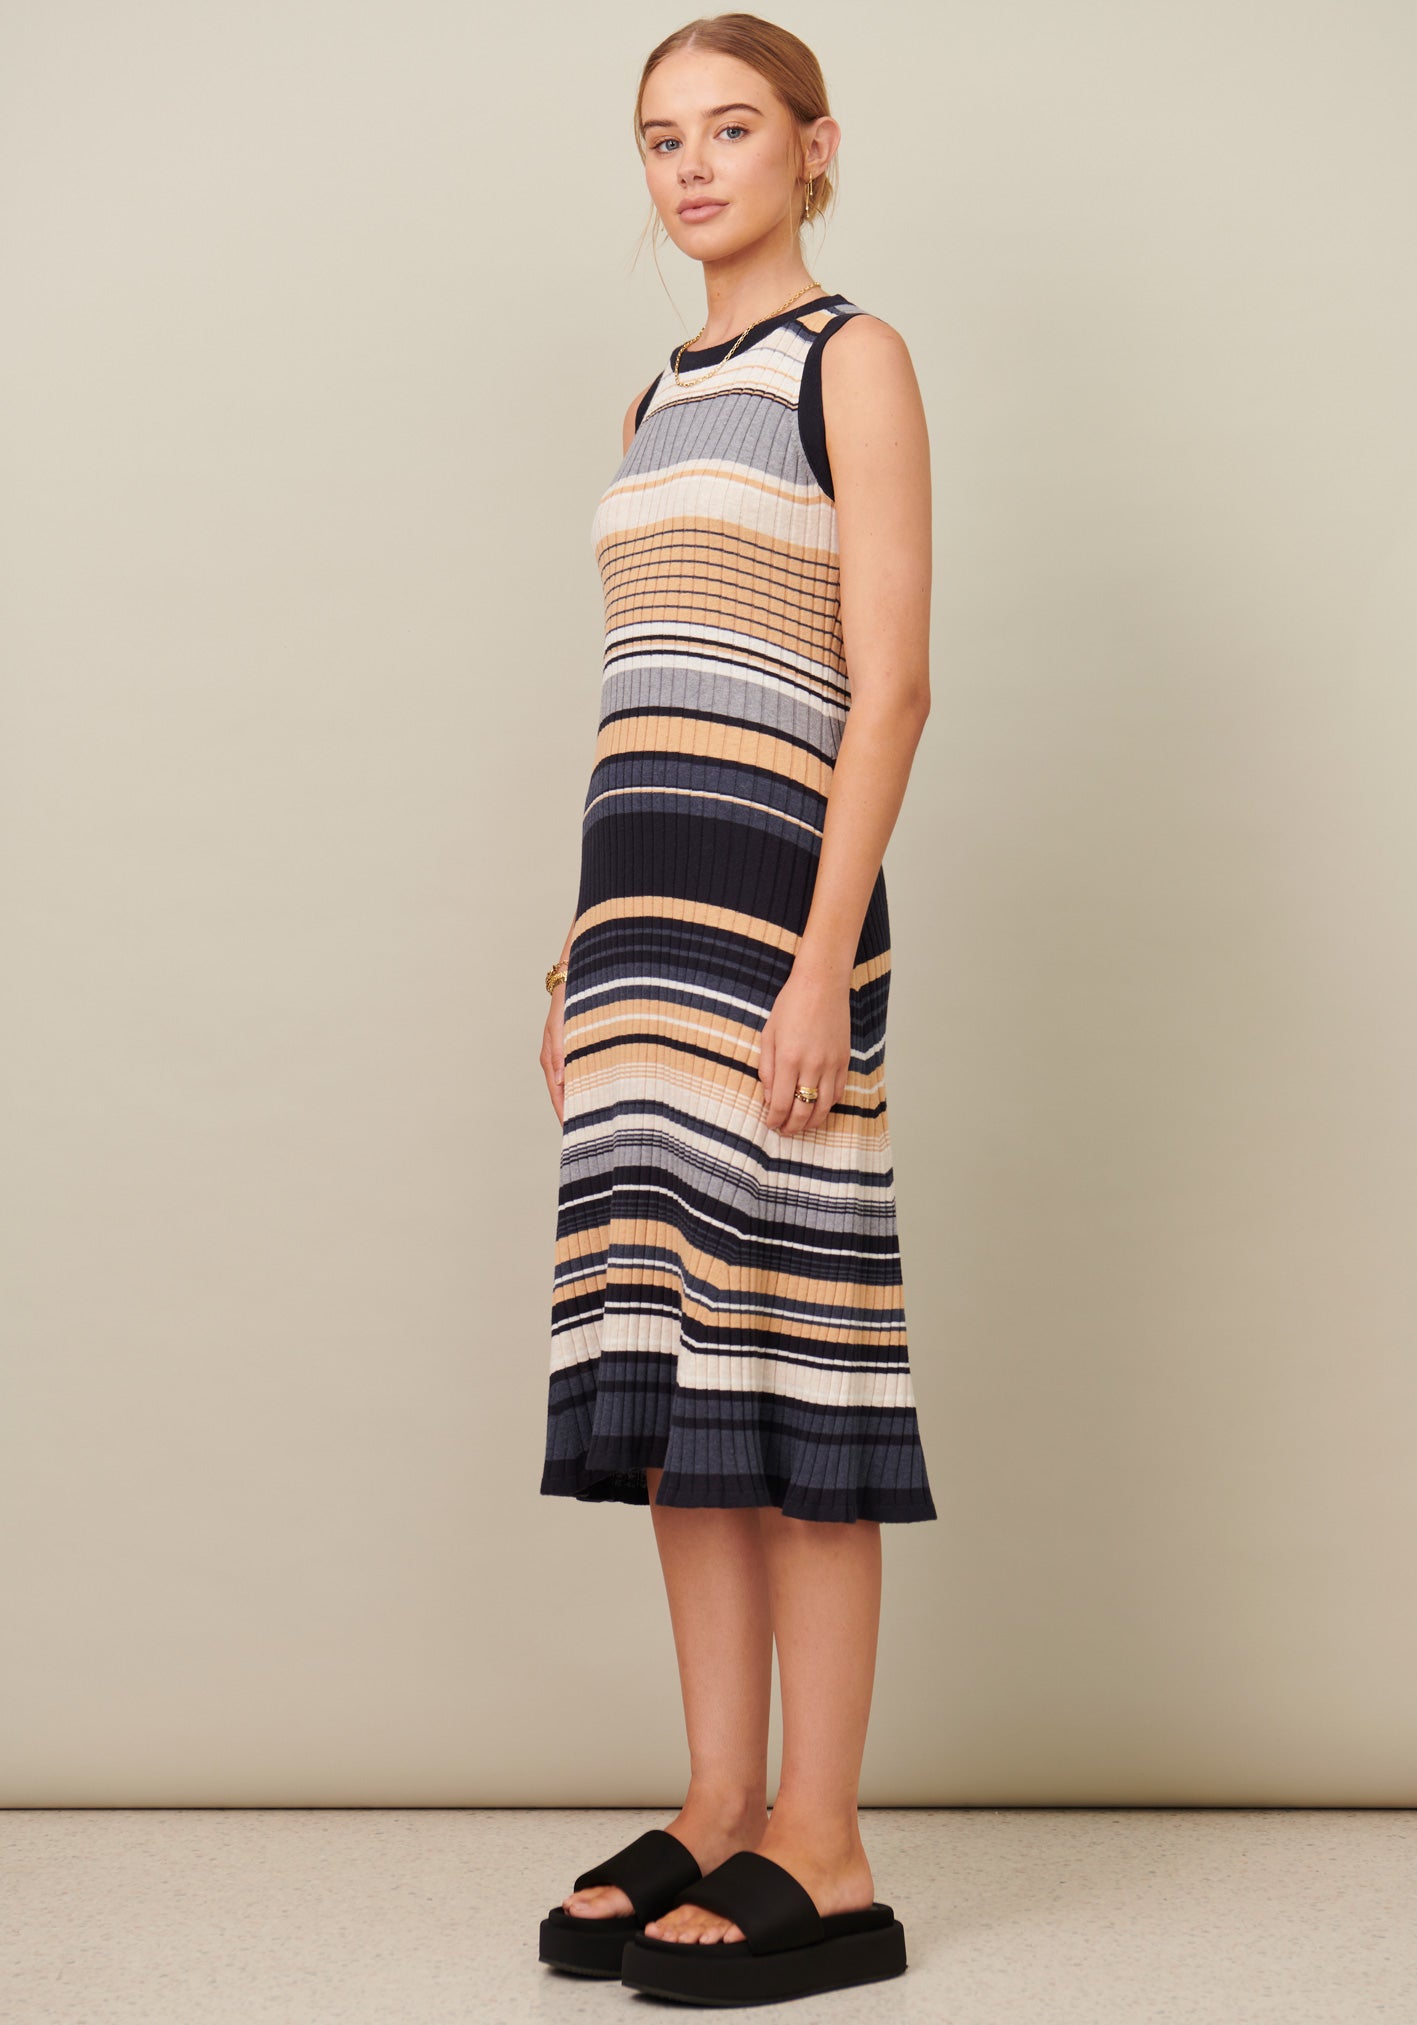 Pol Chloe Knit Dress - Cool